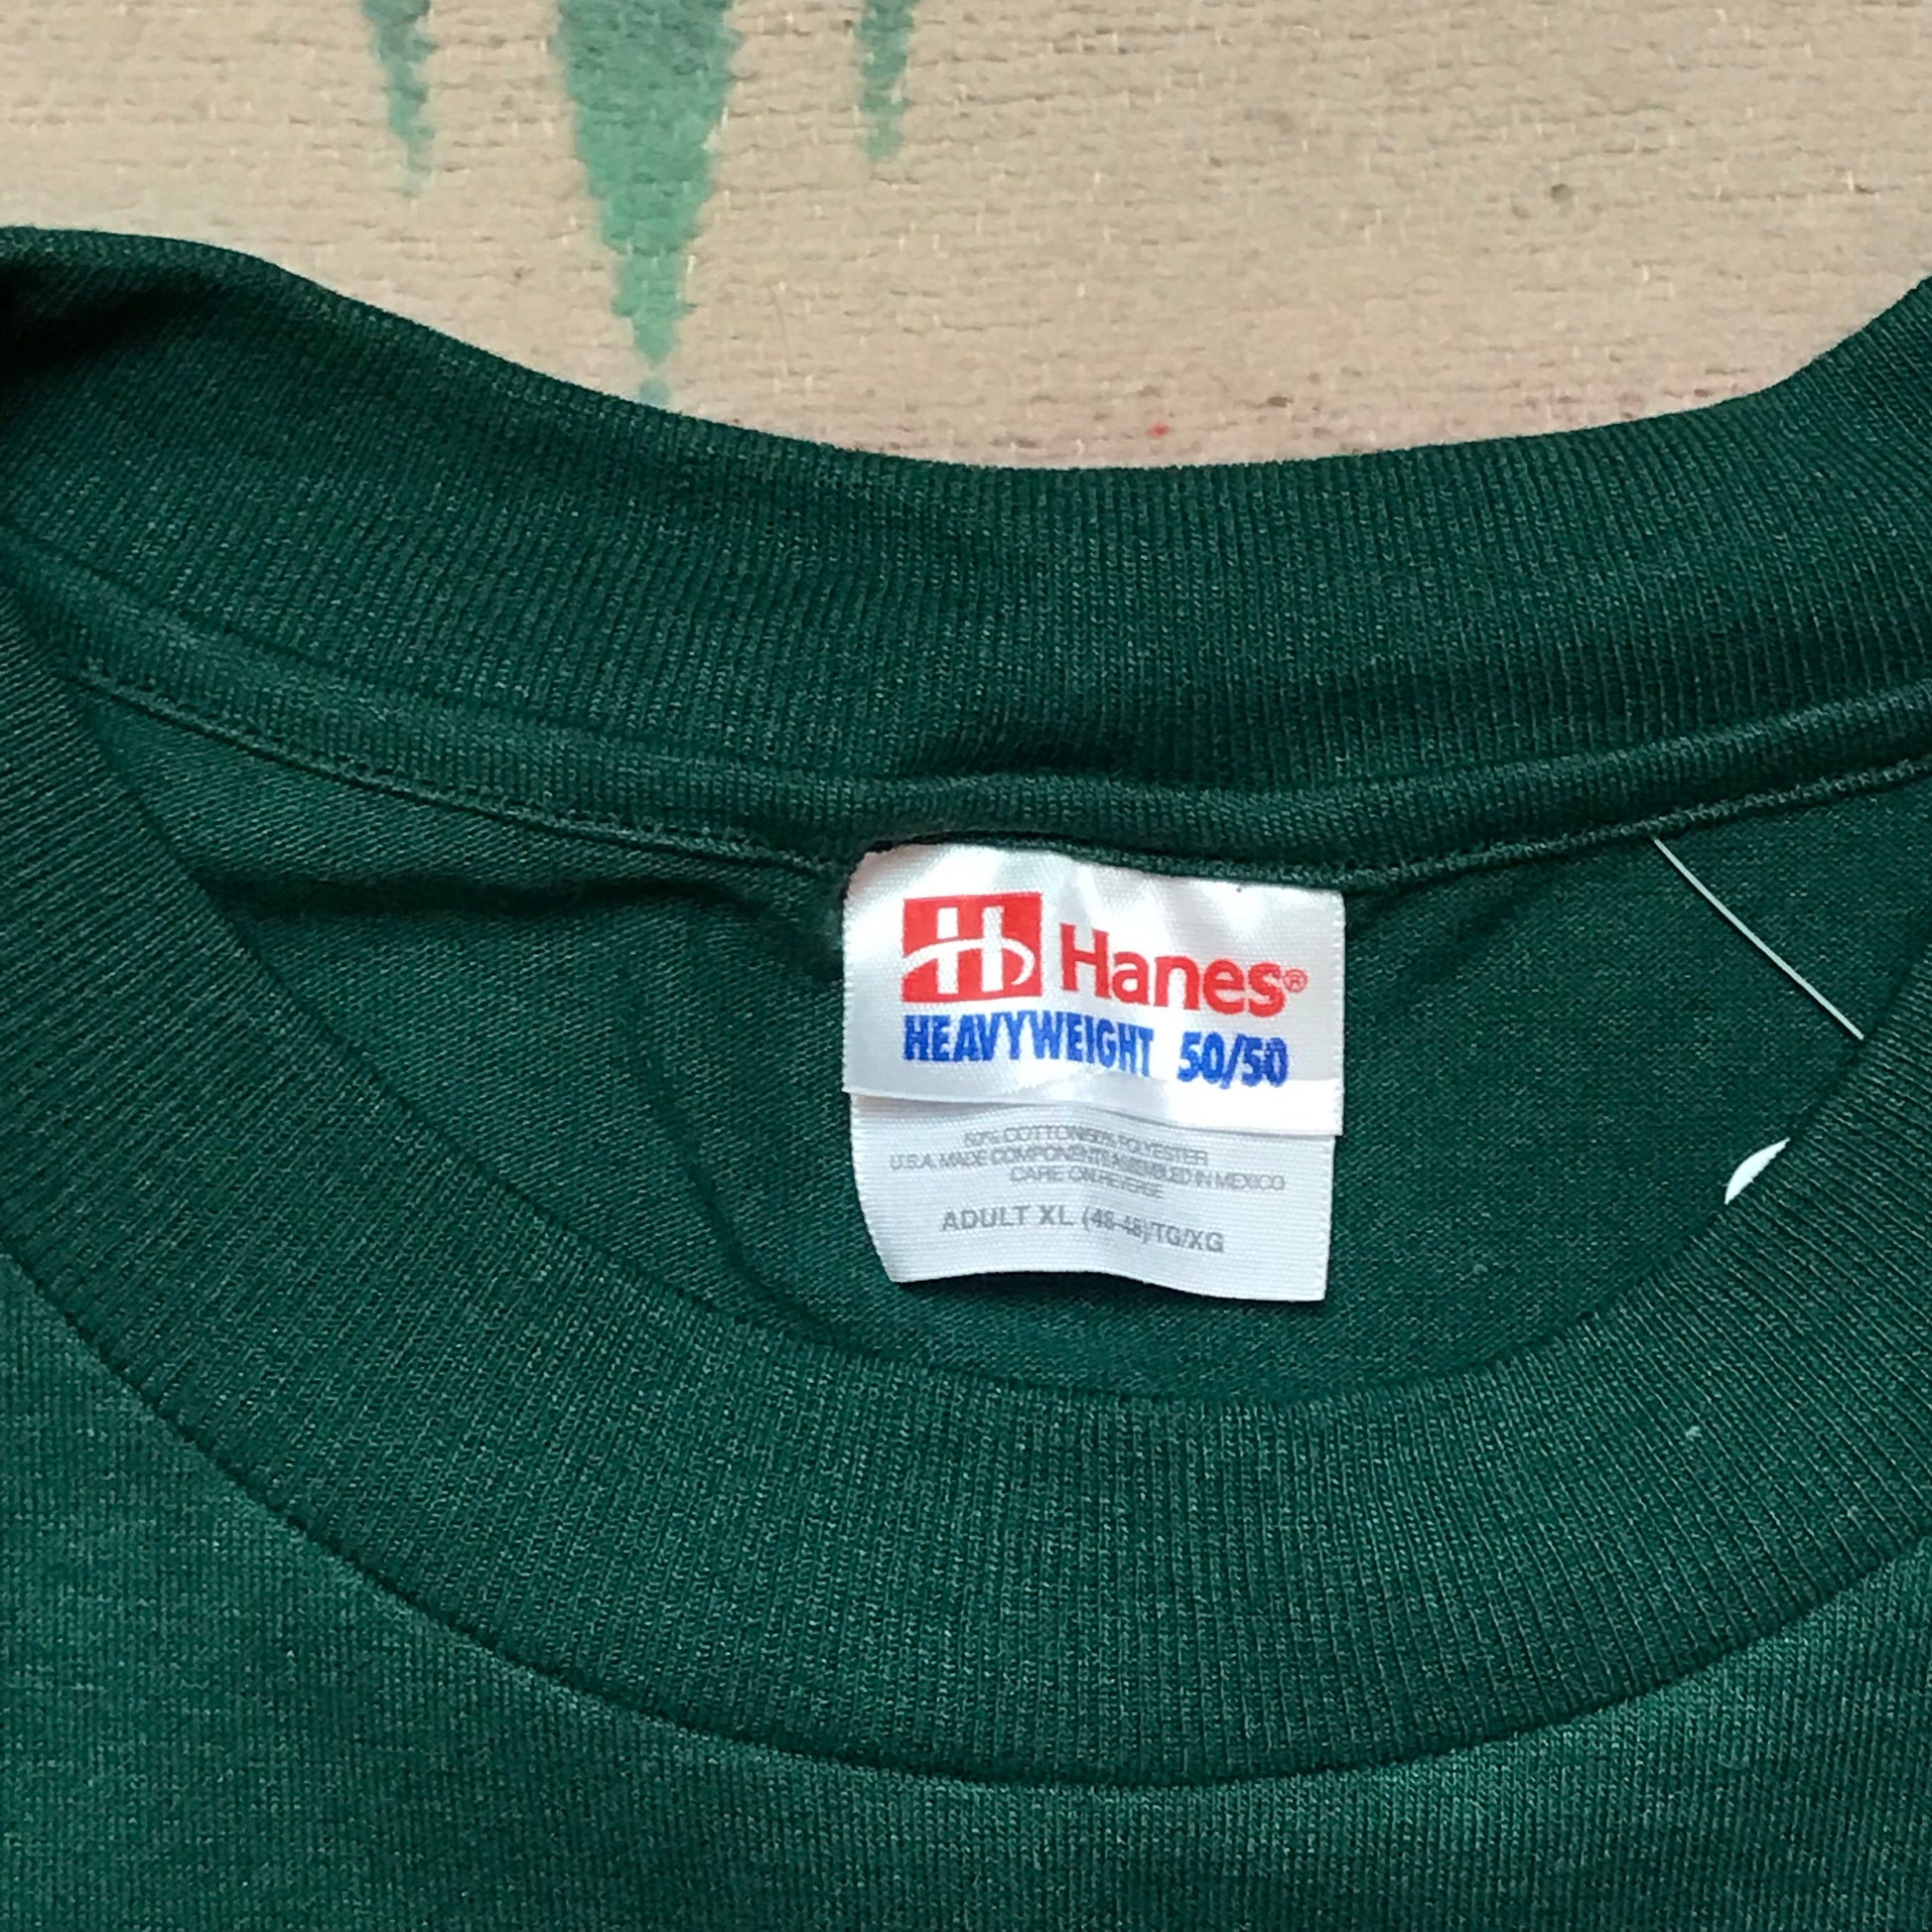 1990s/2000s Greek Week Fraternity Bootleg Simpsons T-Shirt Size XL